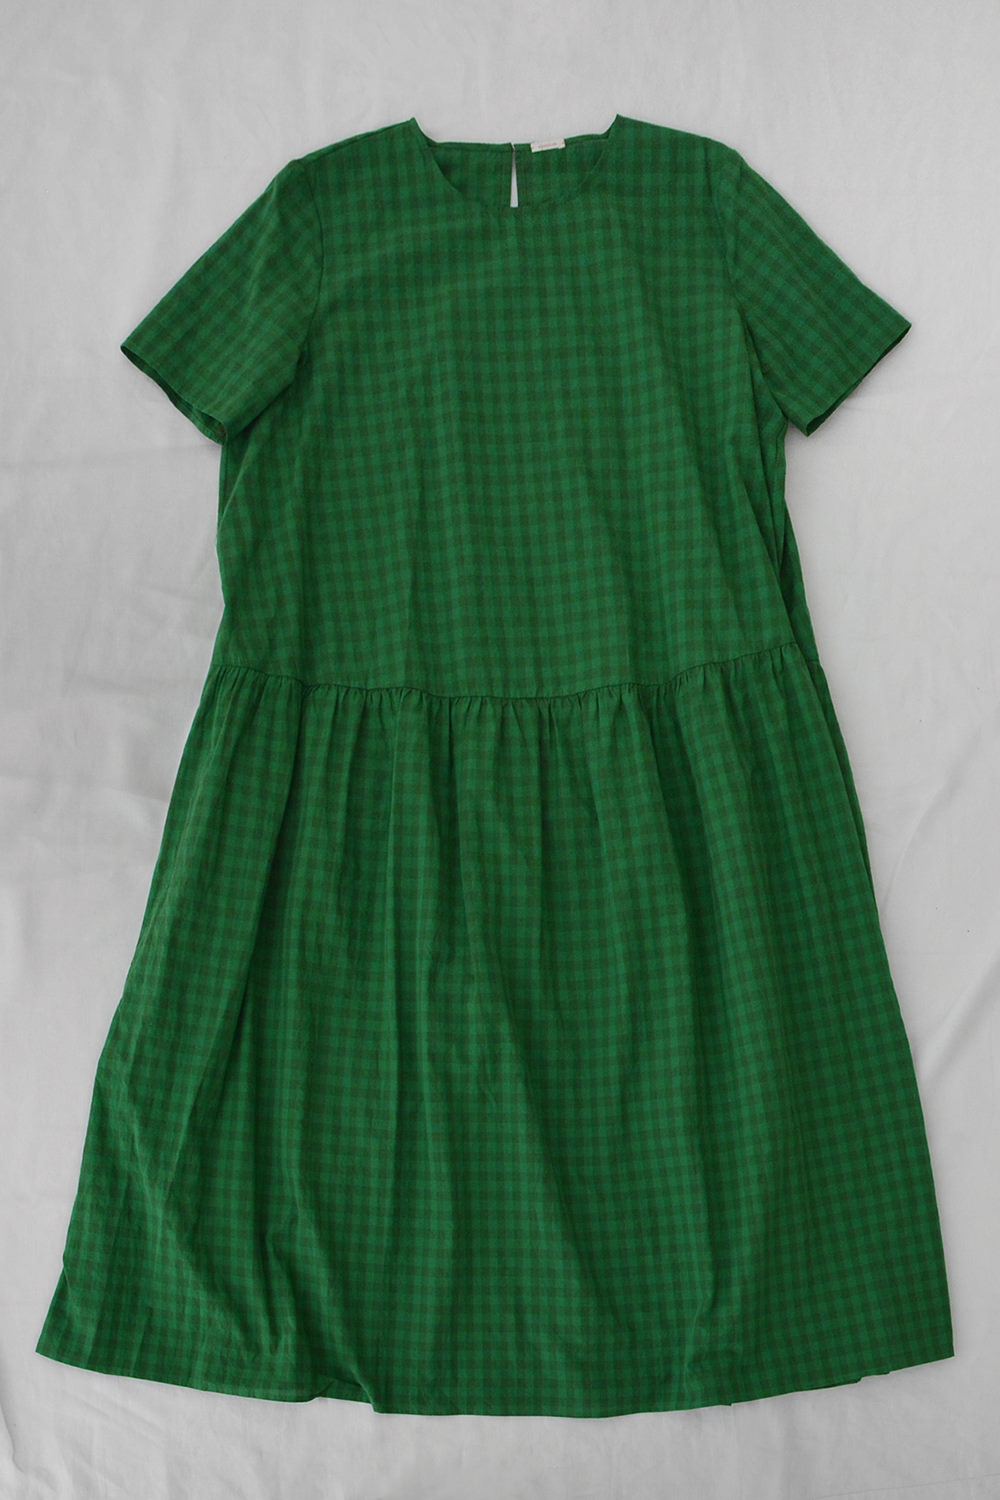 apuntob dress in Green Check. Main